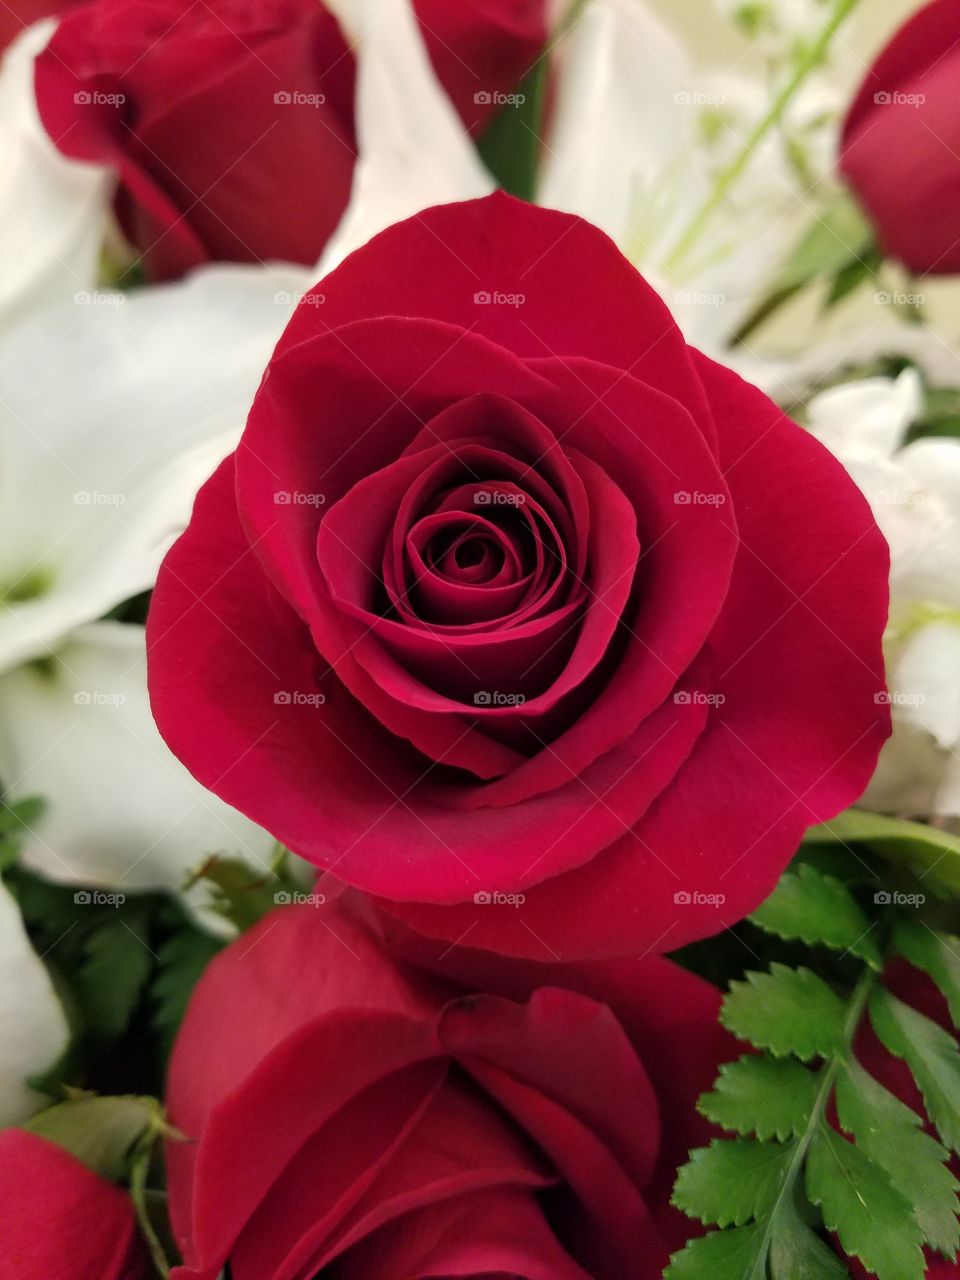 Rose, Flower, Love, Romance, Petal